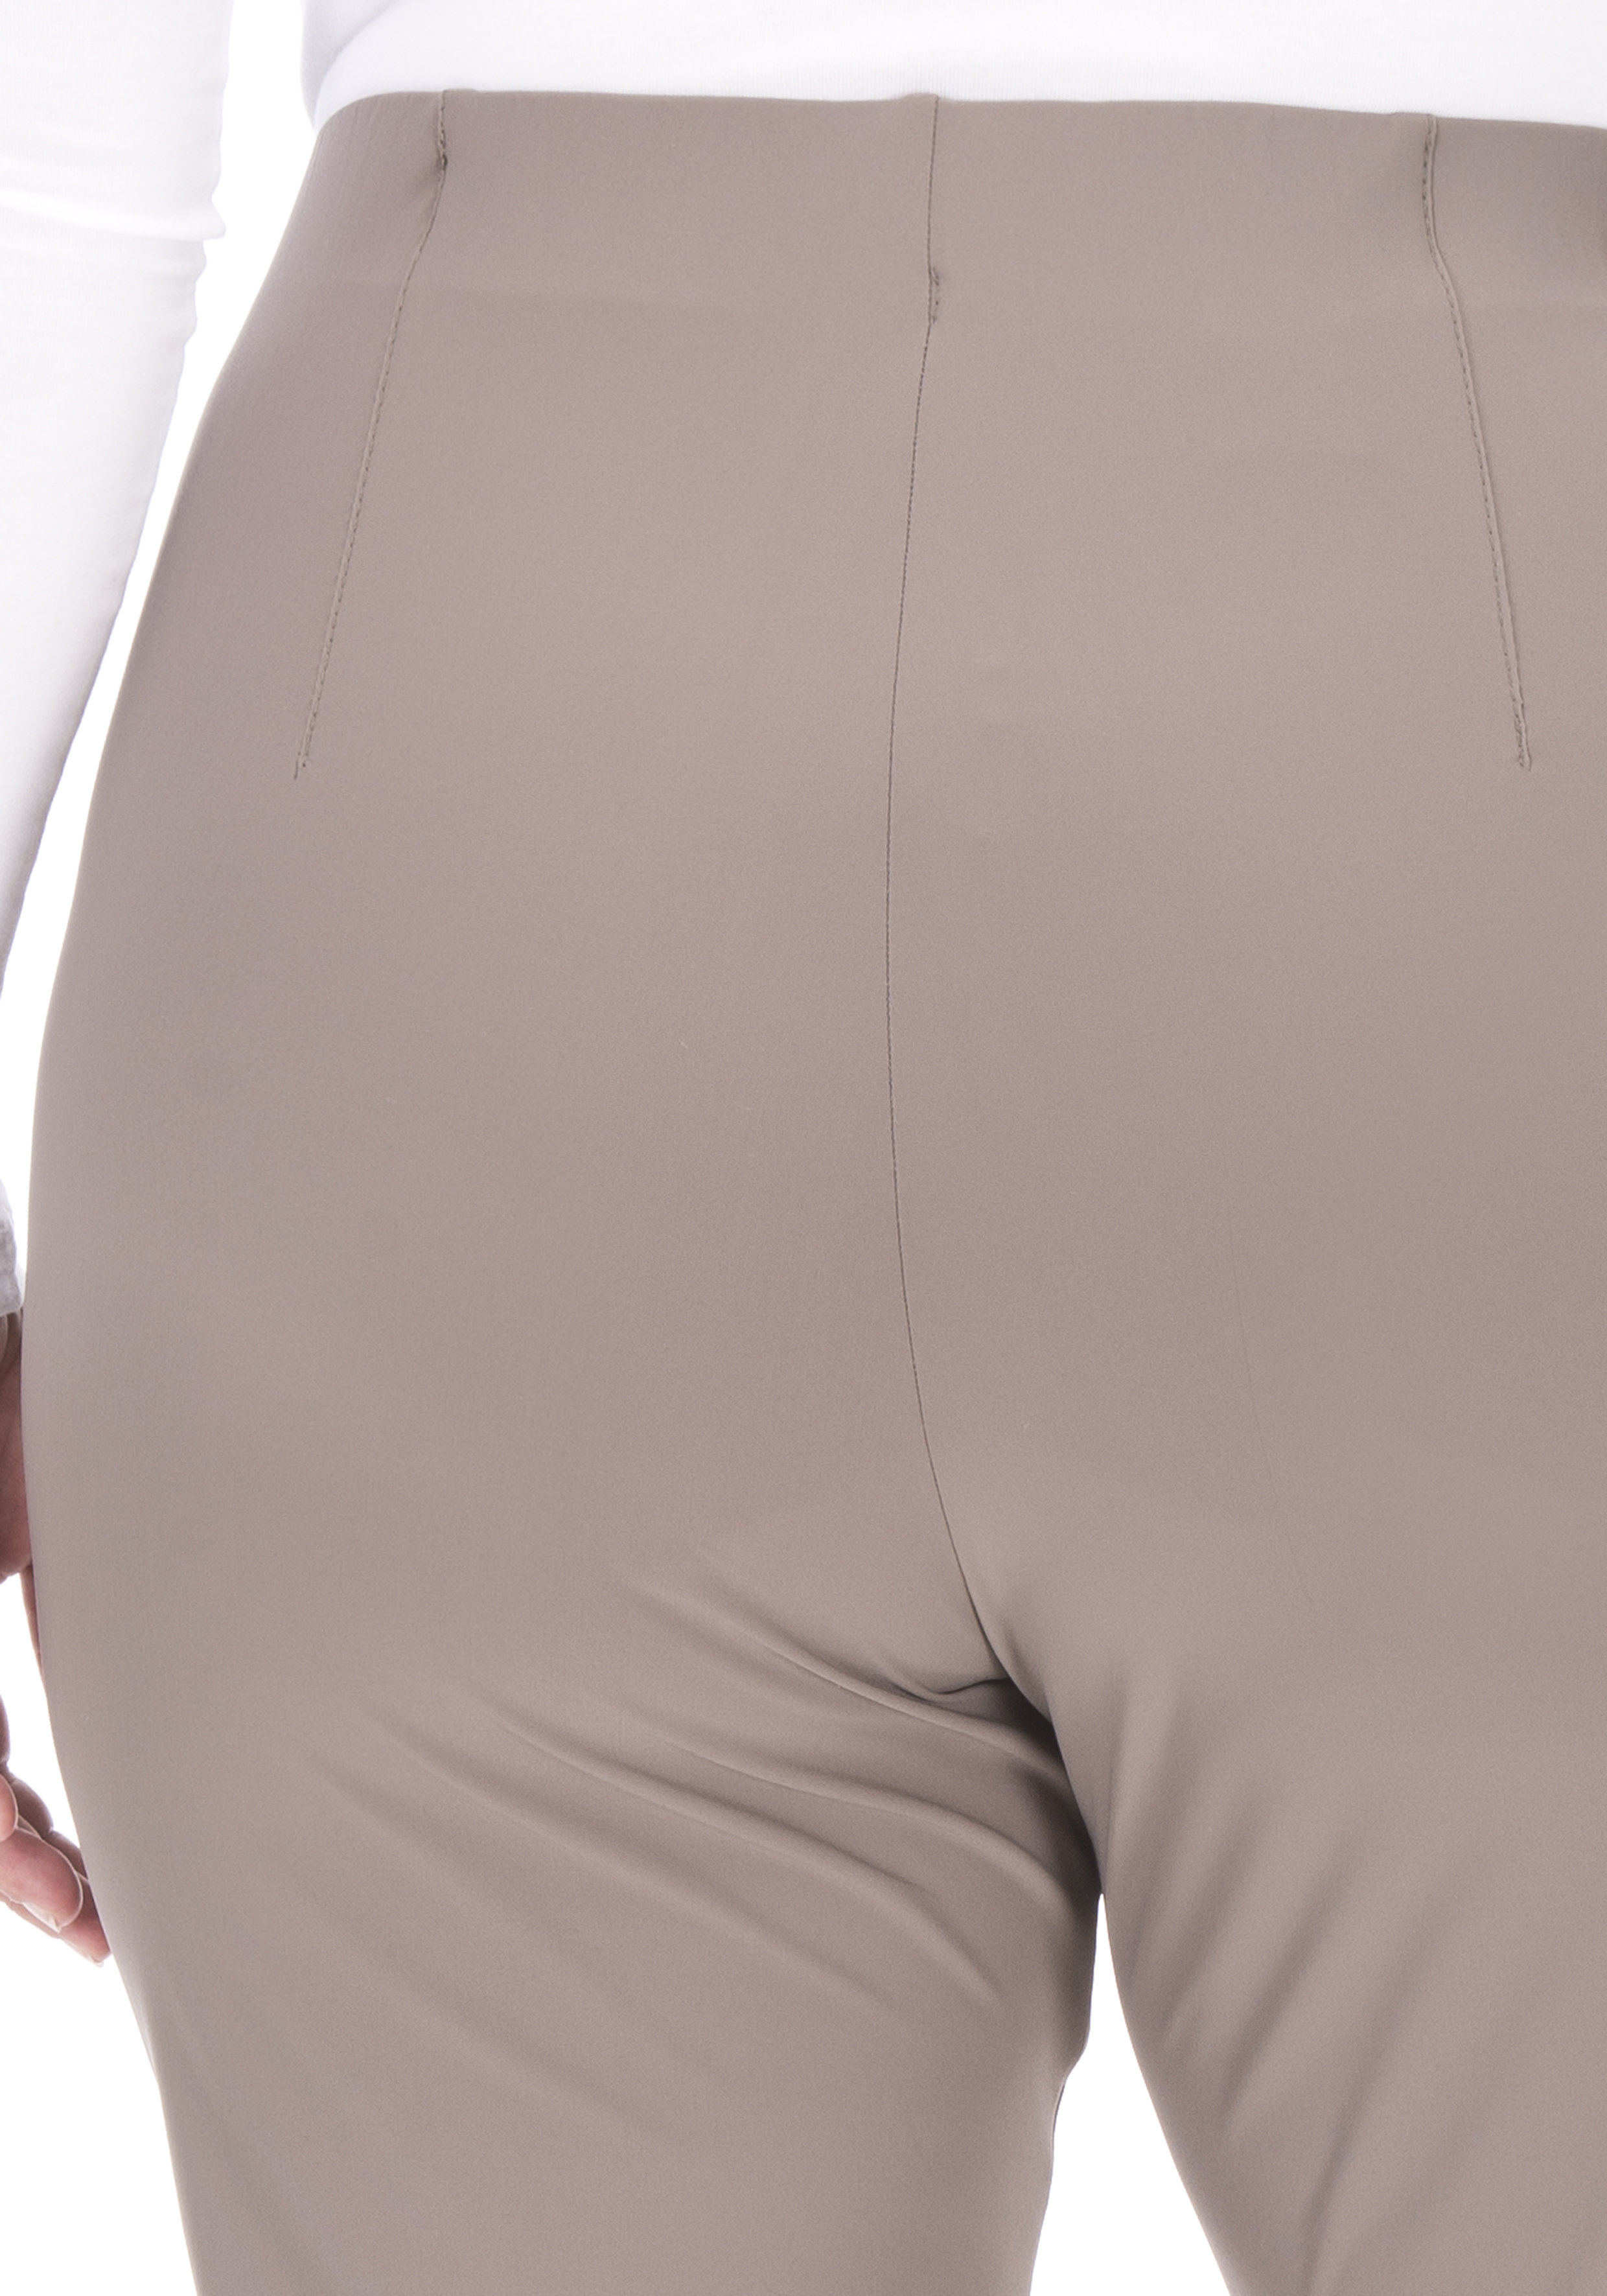 KjBRAND pants sensitive long SUSIE winter quality - Curvy by BiNA